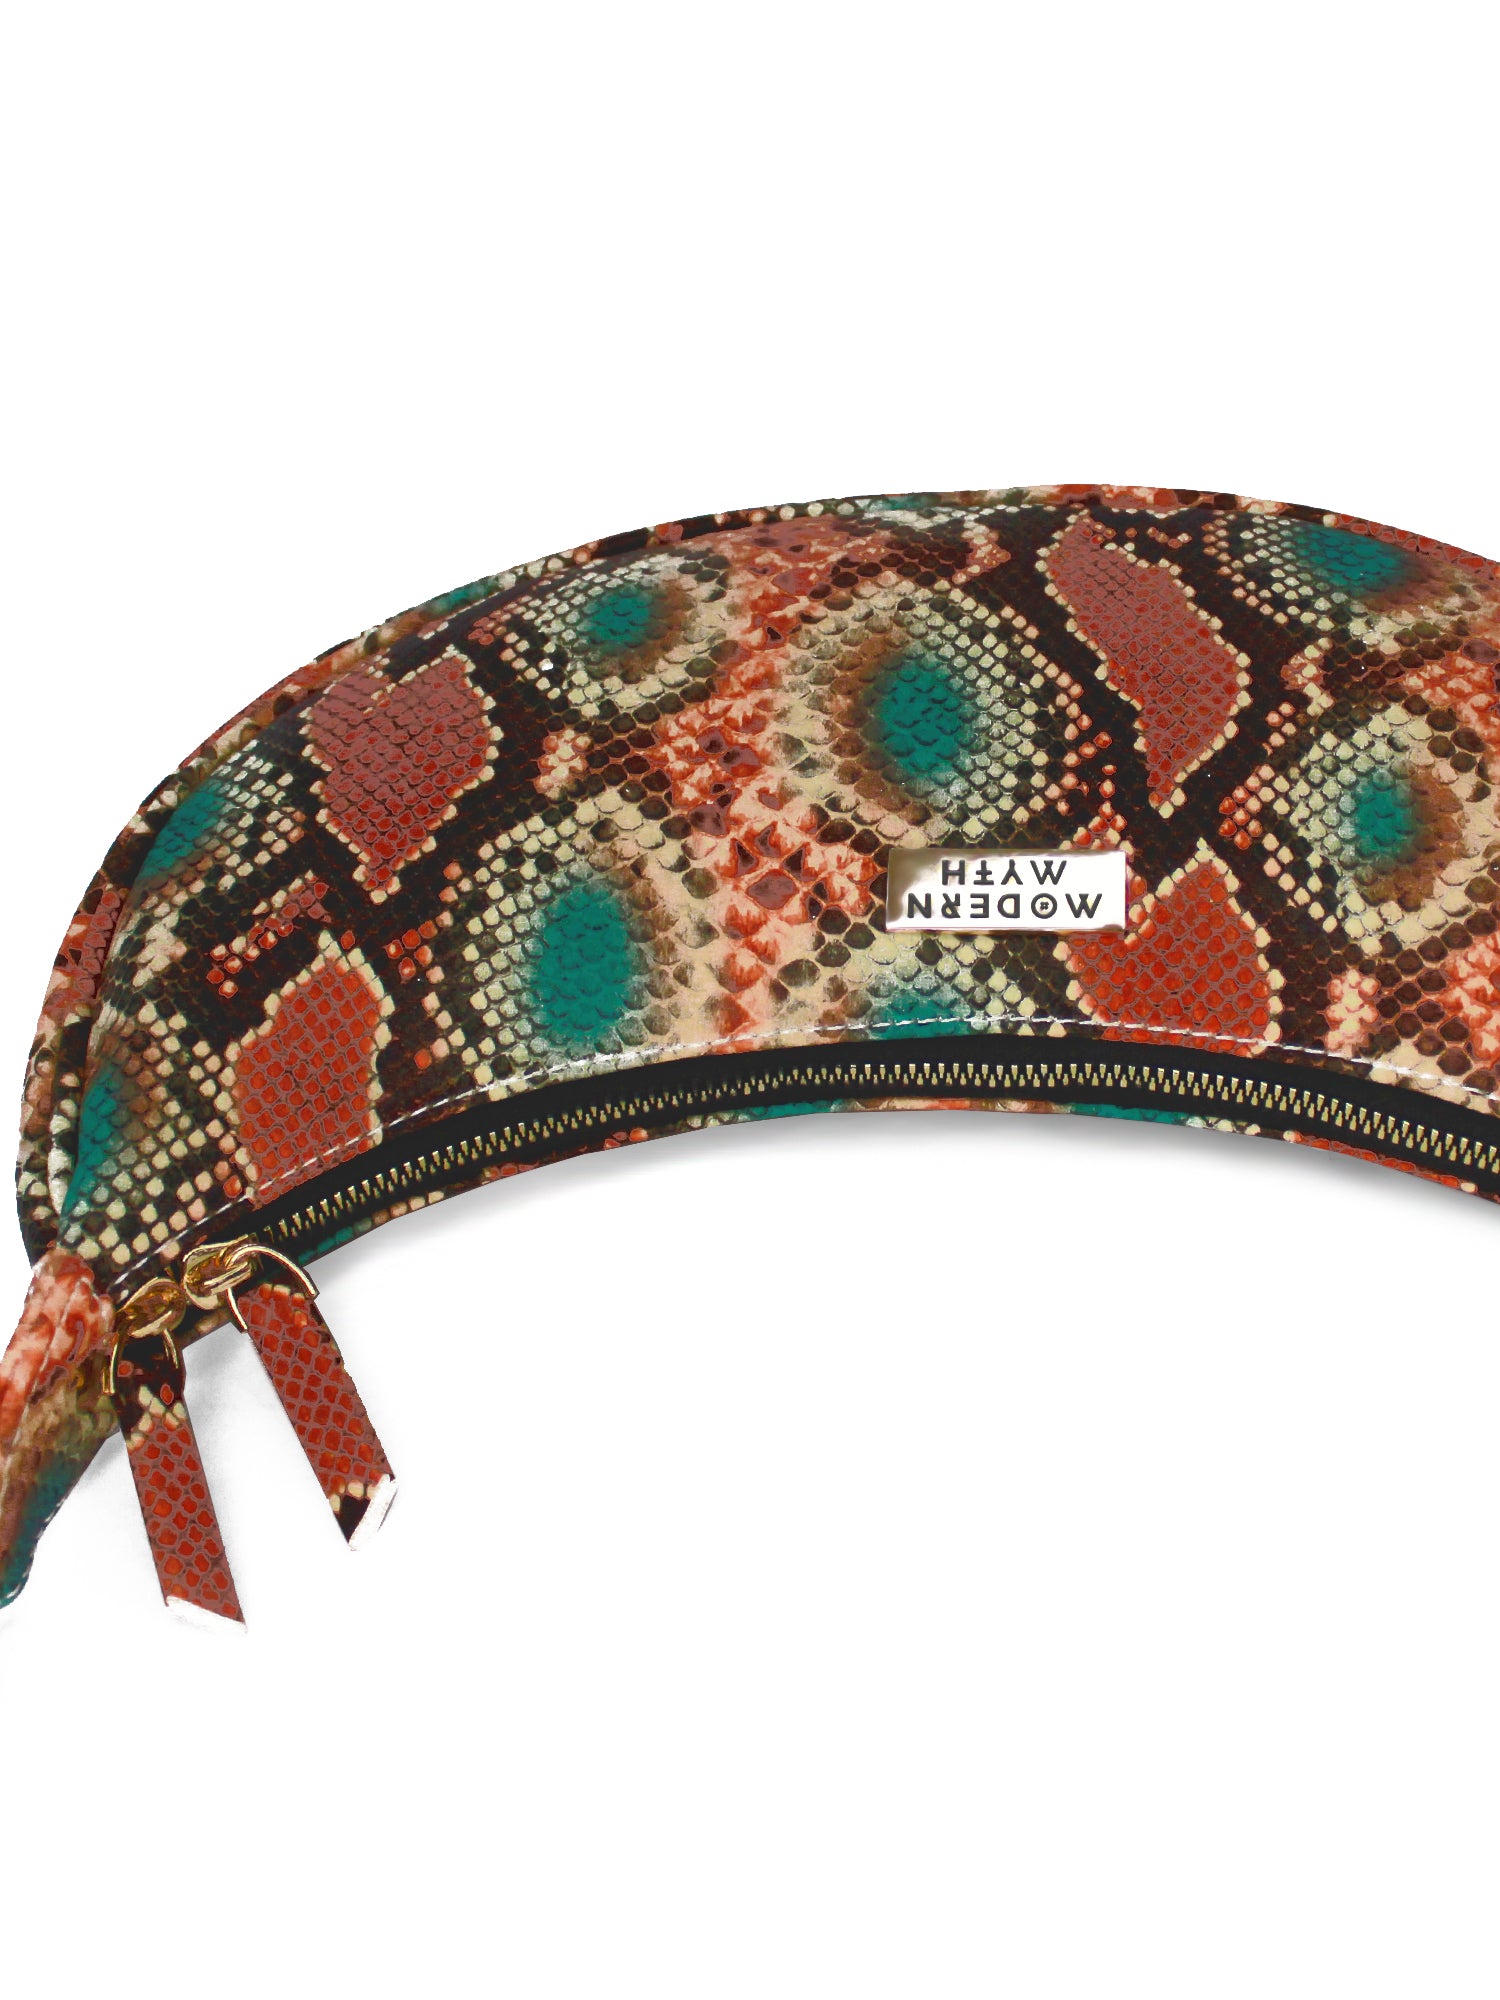 Forest & Twelfth Multicolor Snakeskin Pattern Handbag – Chic & Trendy  Evening Bag for Ladies – Colorful Snakeskin Purse (B-LG-PI): Handbags:  Amazon.com